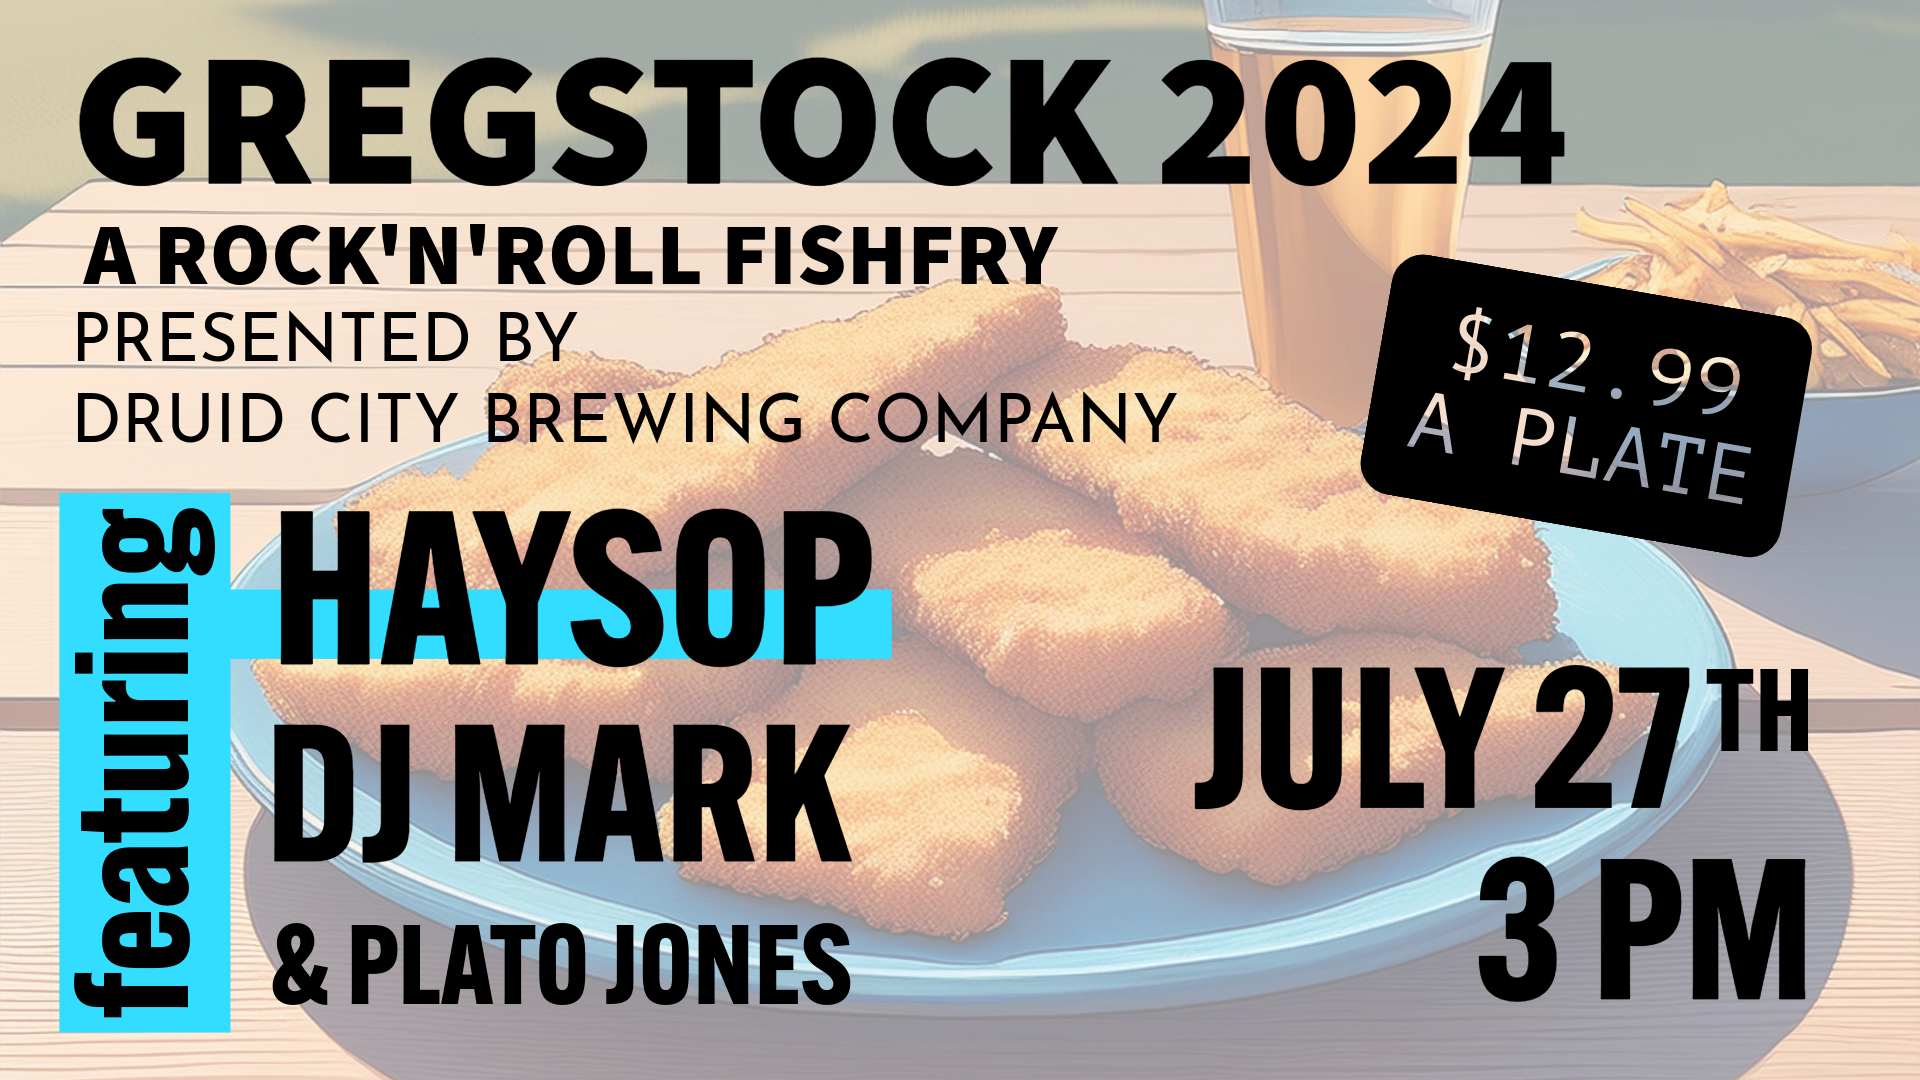 Gregstock 2024 featuring Haysop DJ Mark and Plato Jones